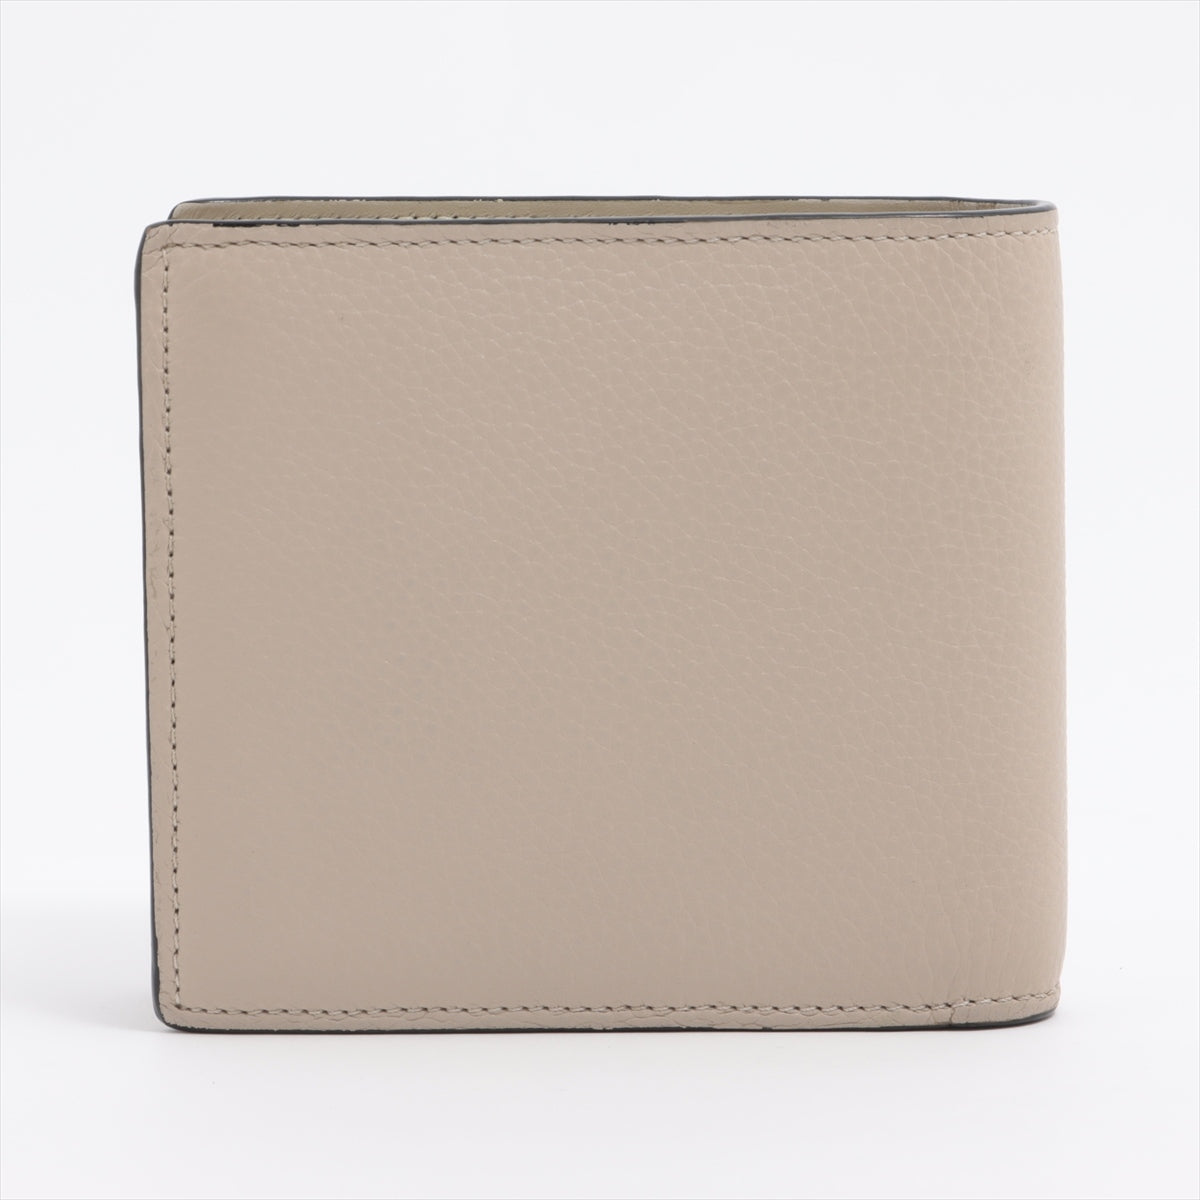 Loewe Anagram Leather Compact Wallet Beige